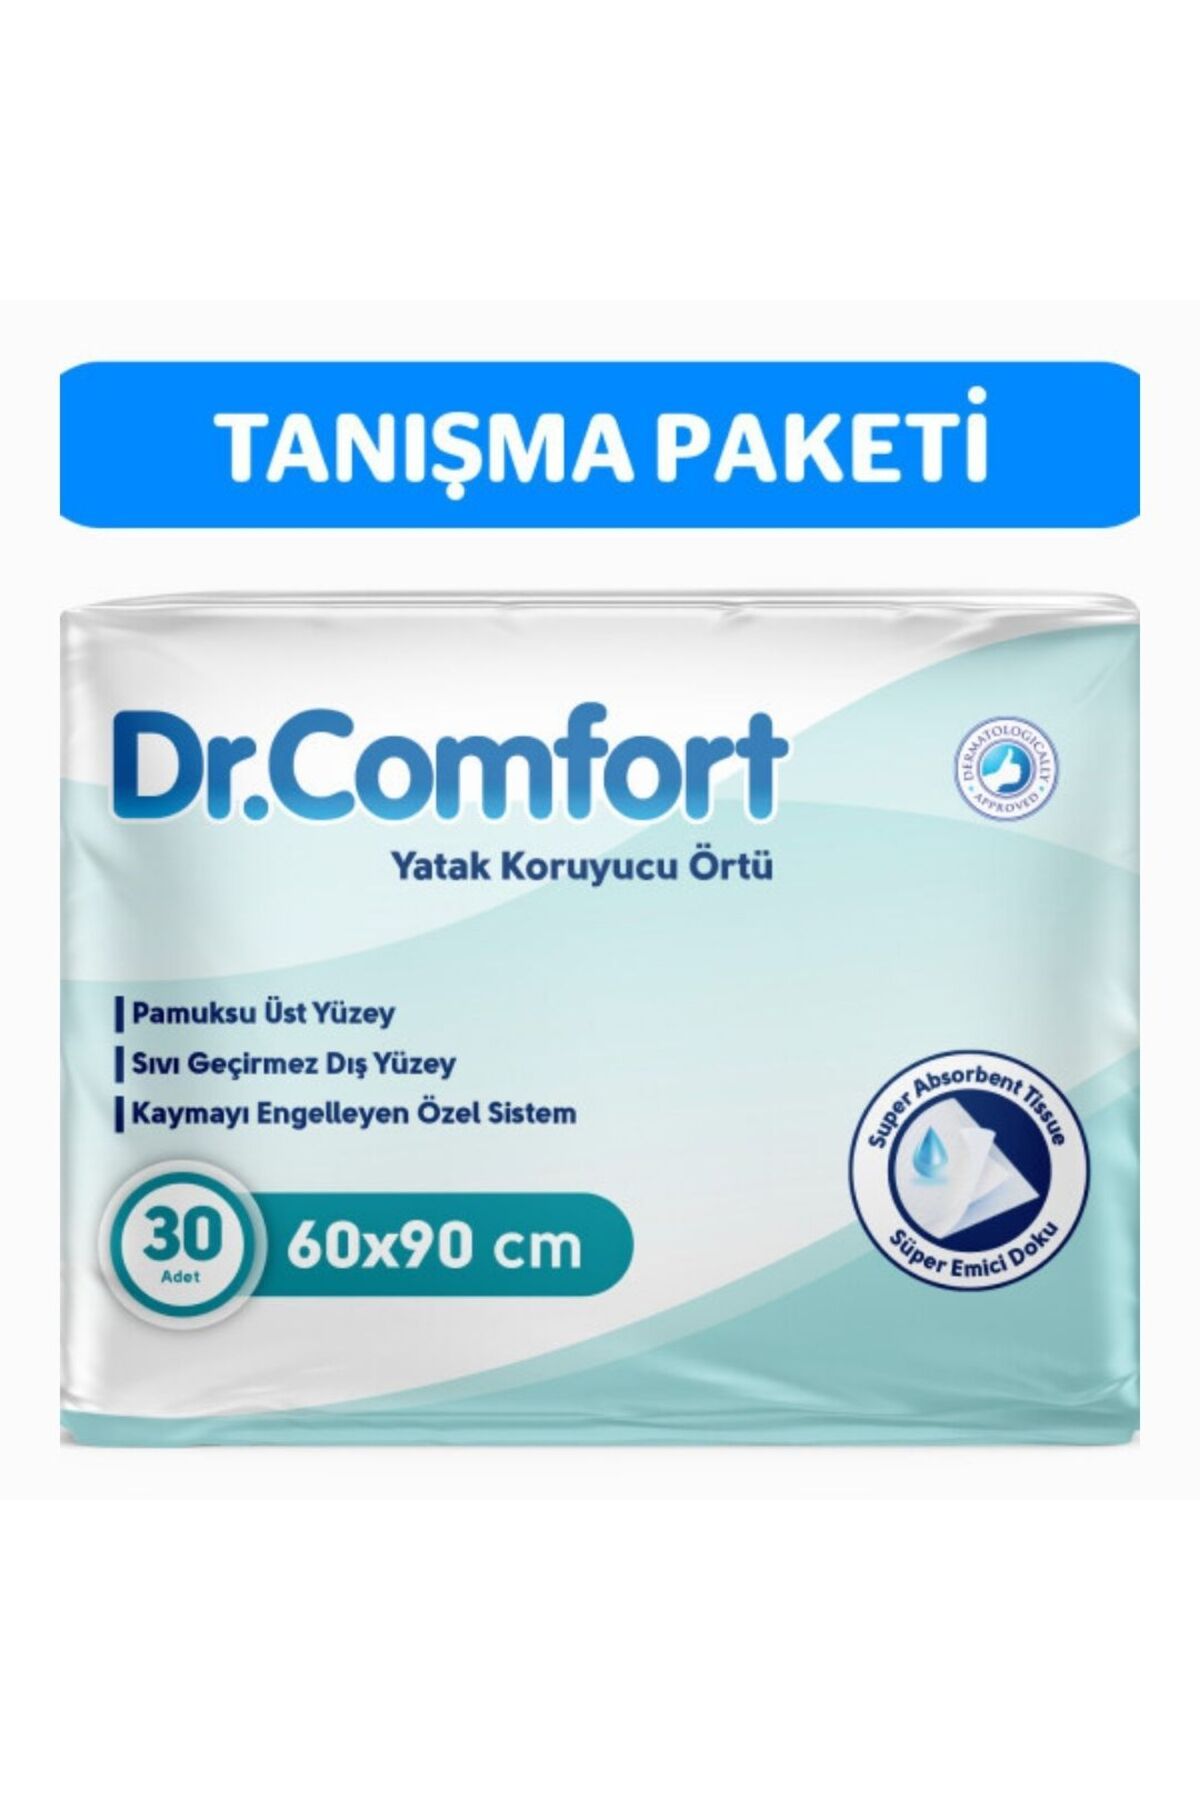 Dr.Comfort Dr Comfort 60x90 Yatak Koruyucu Örtü 30 Adet